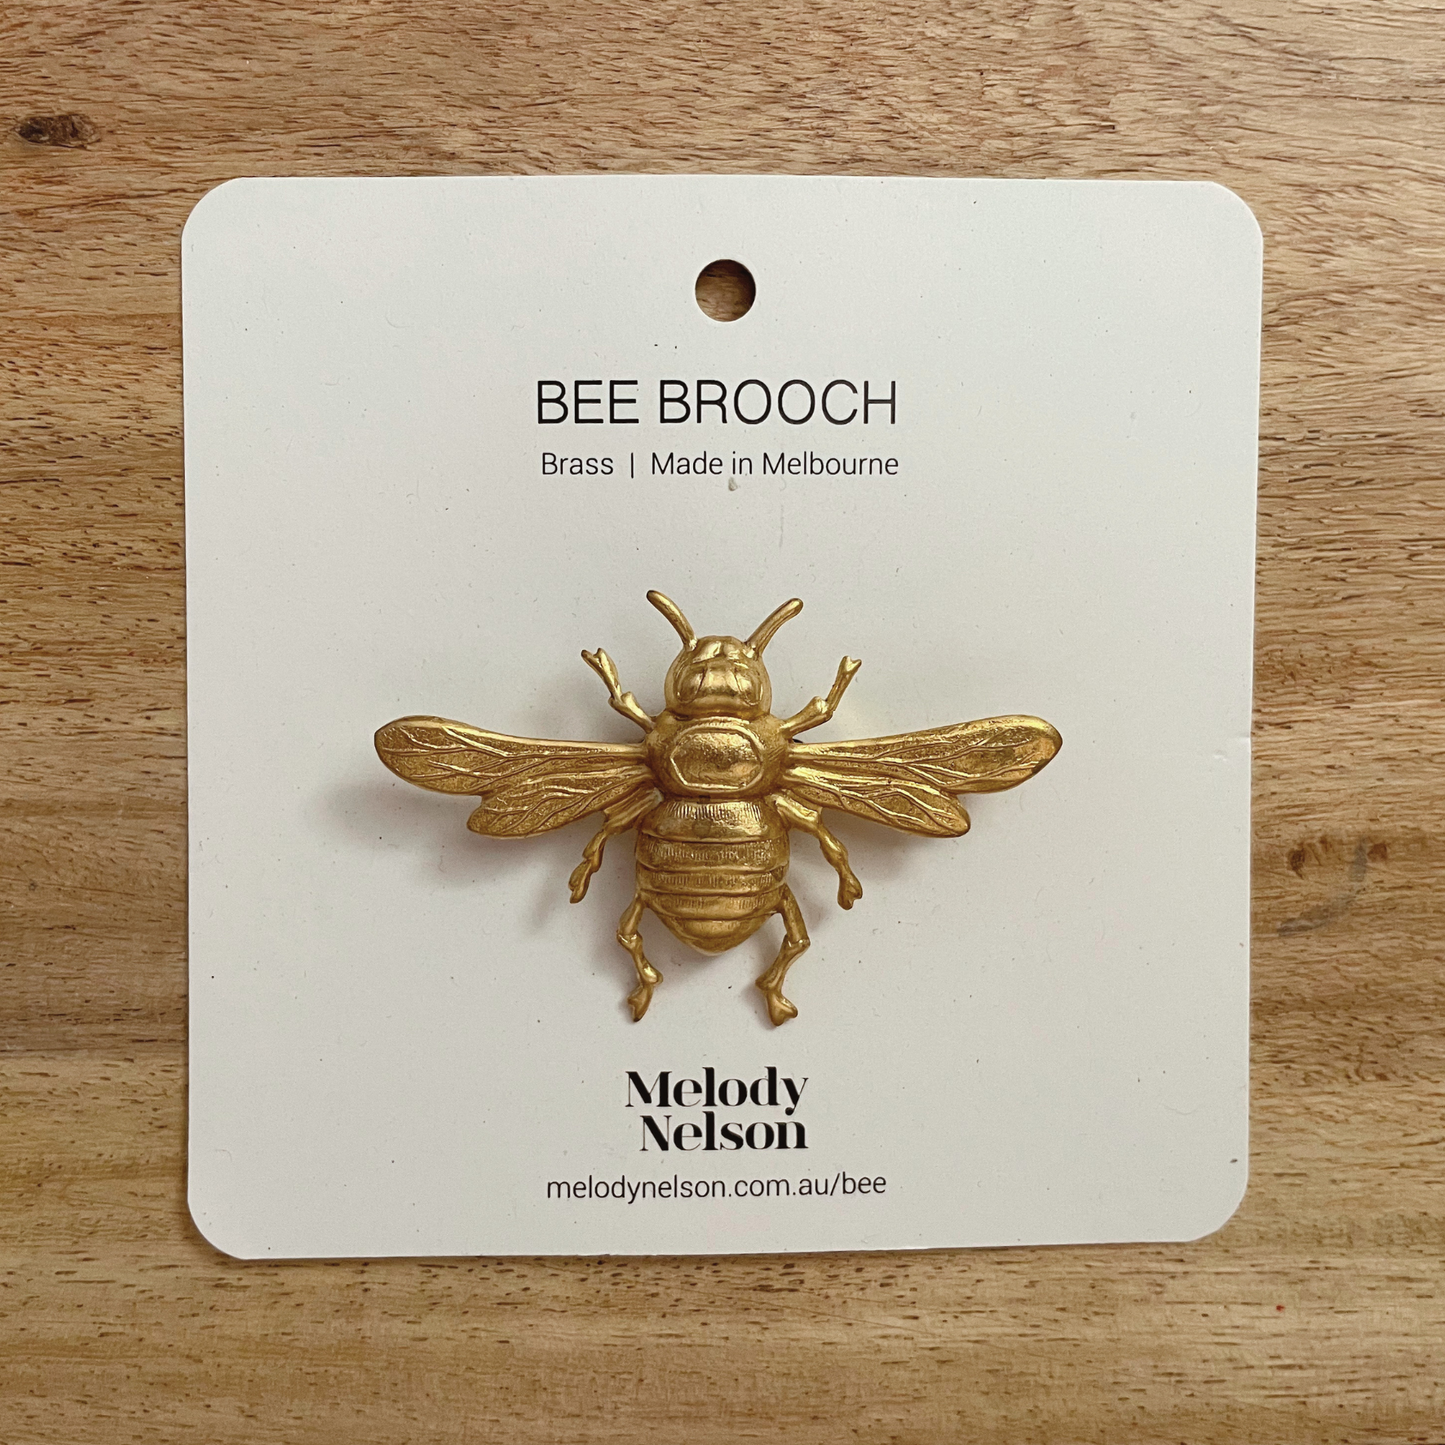 Melody Nelson - Brass Bee Brooch